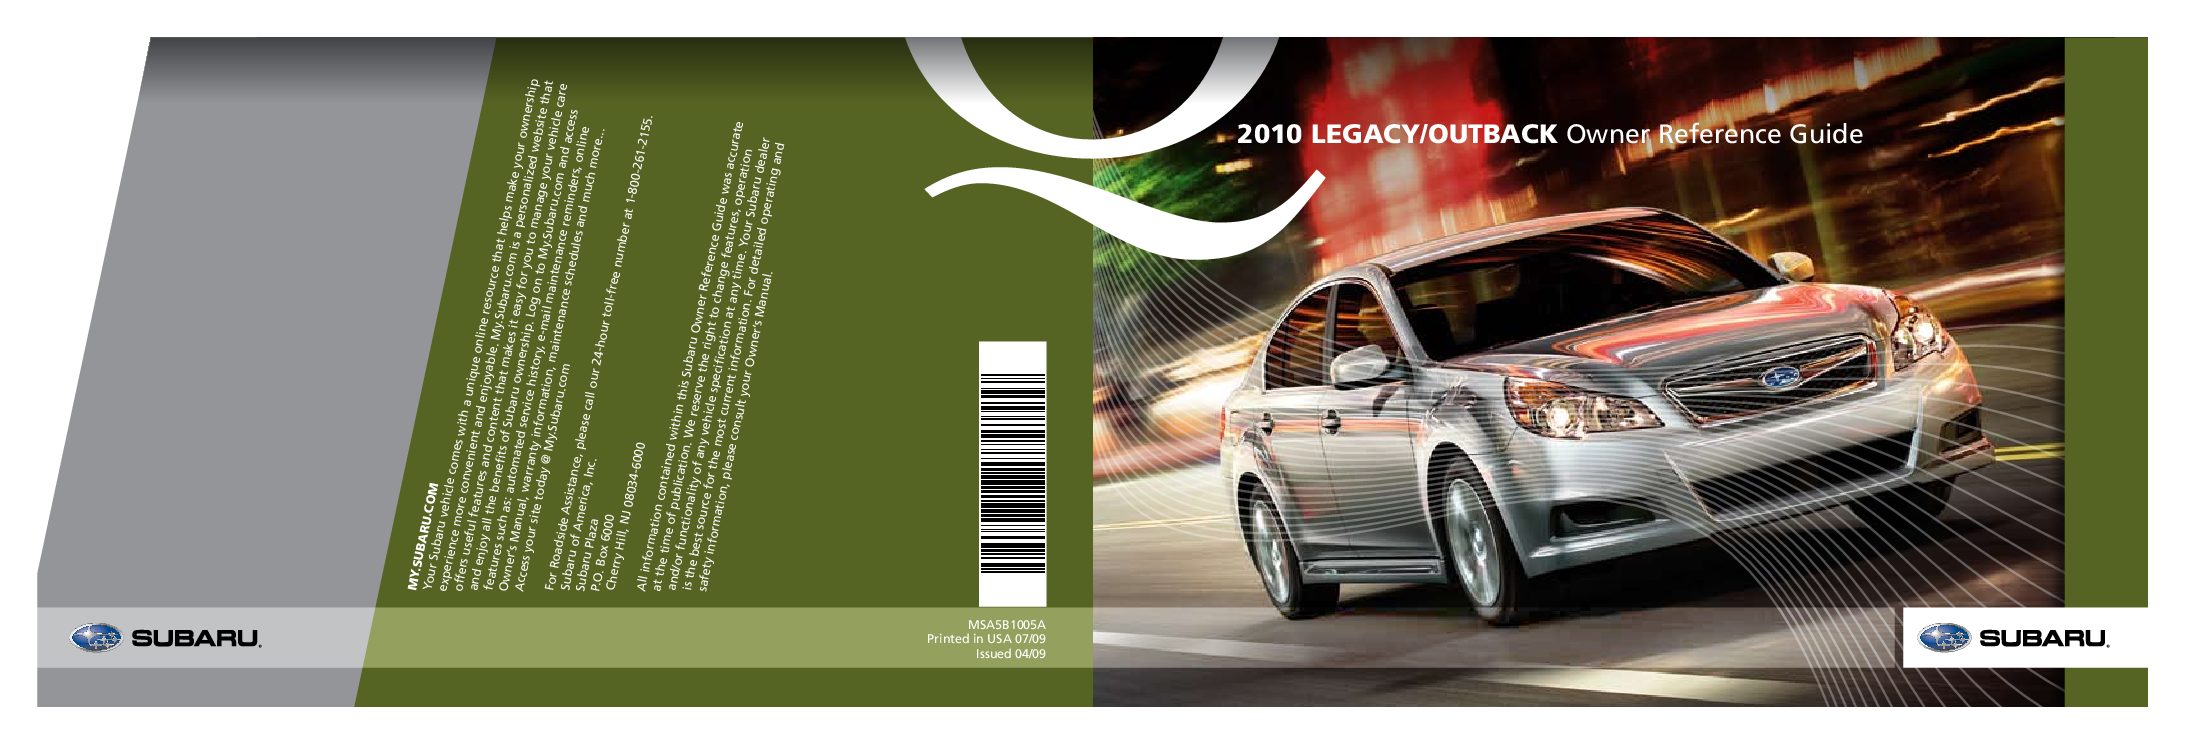 2010 Subaru Legacy Image